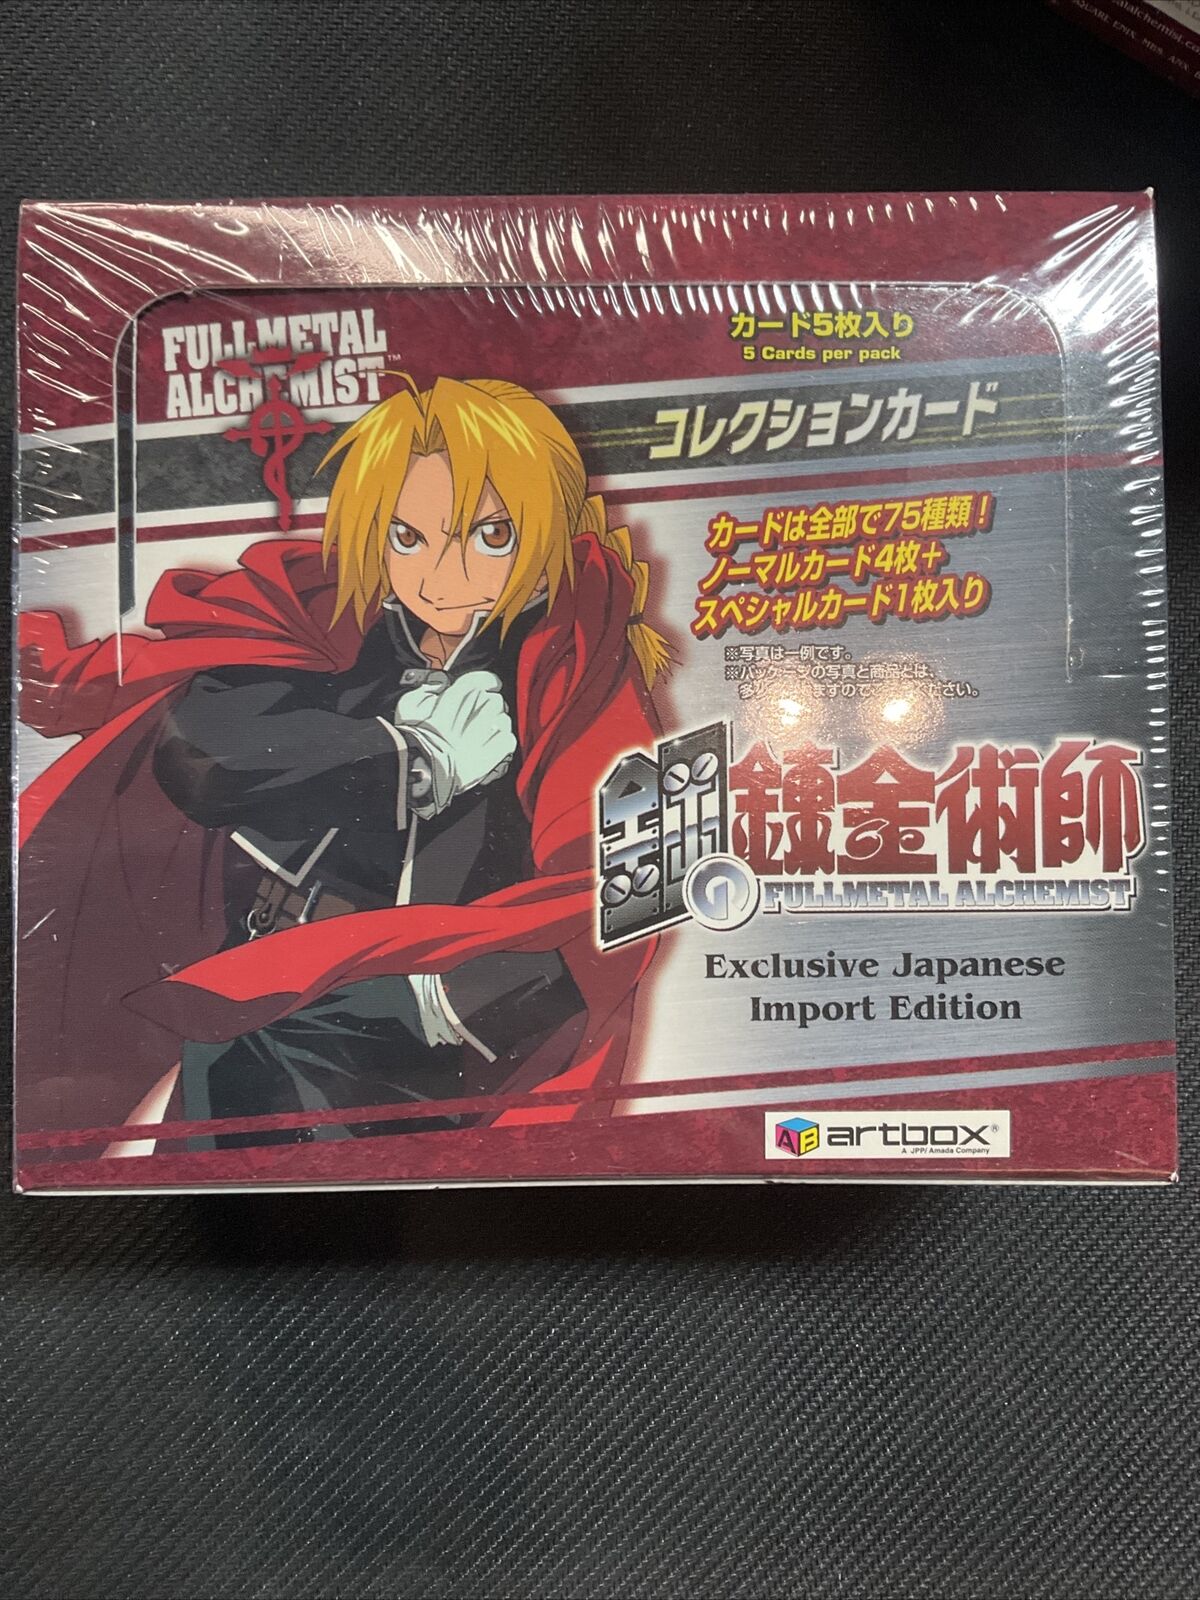 2004 Artbox FullMetal Alchemist sealed trading card box 24 pack Japanese Import